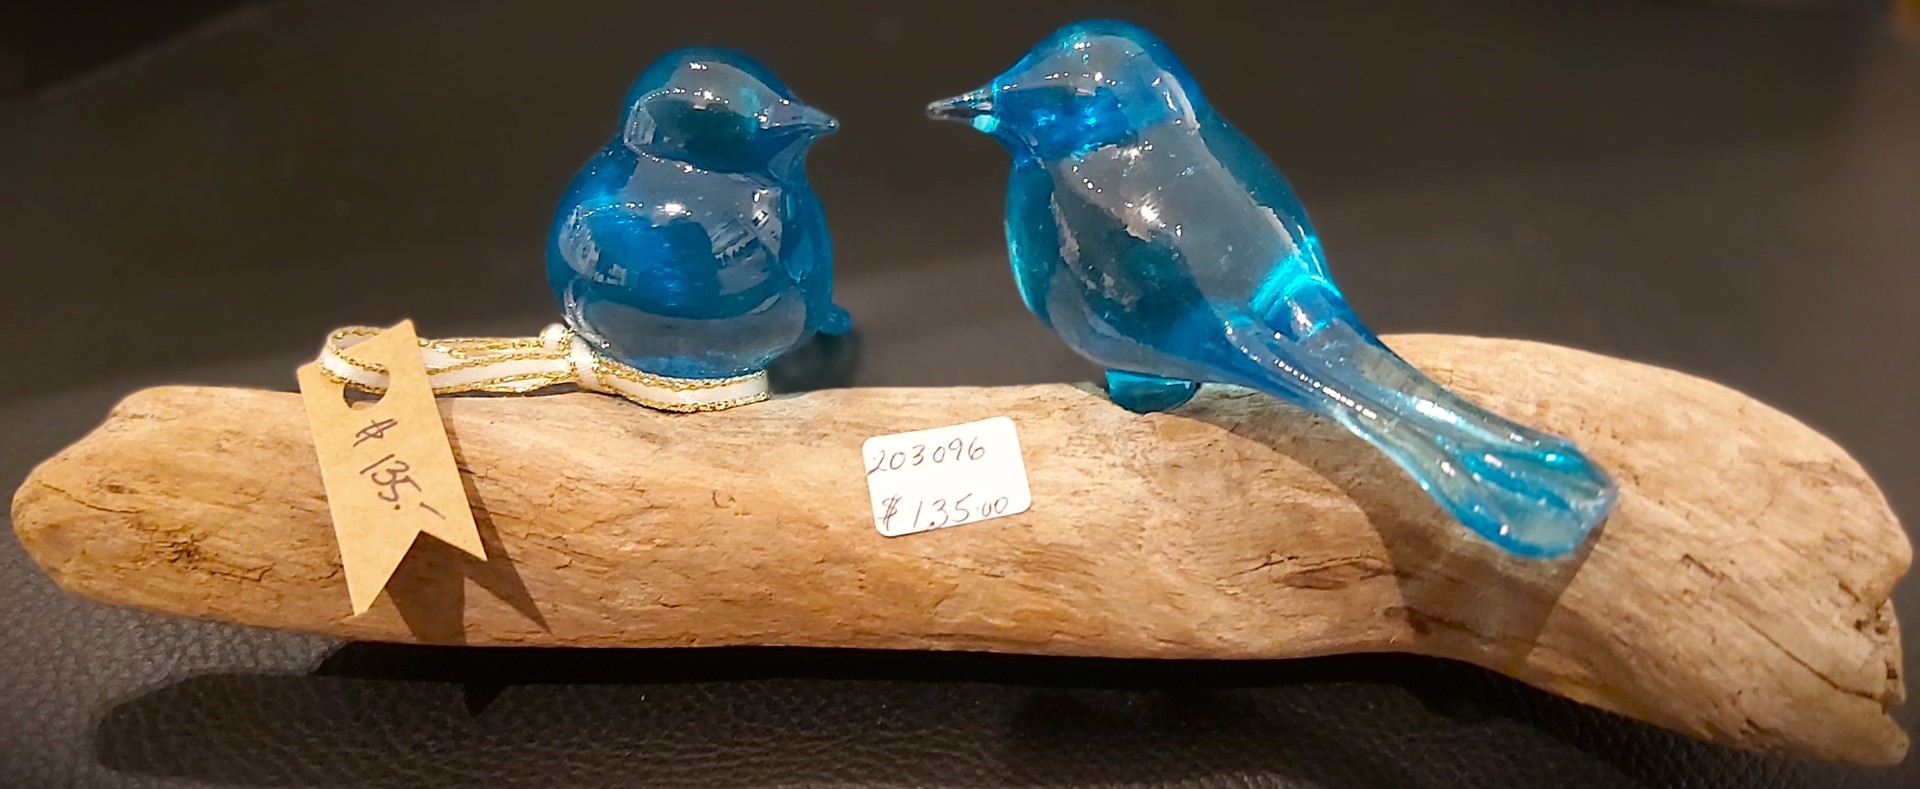 2 Copper Blue Birds - 203096 by Carol Nesbitt